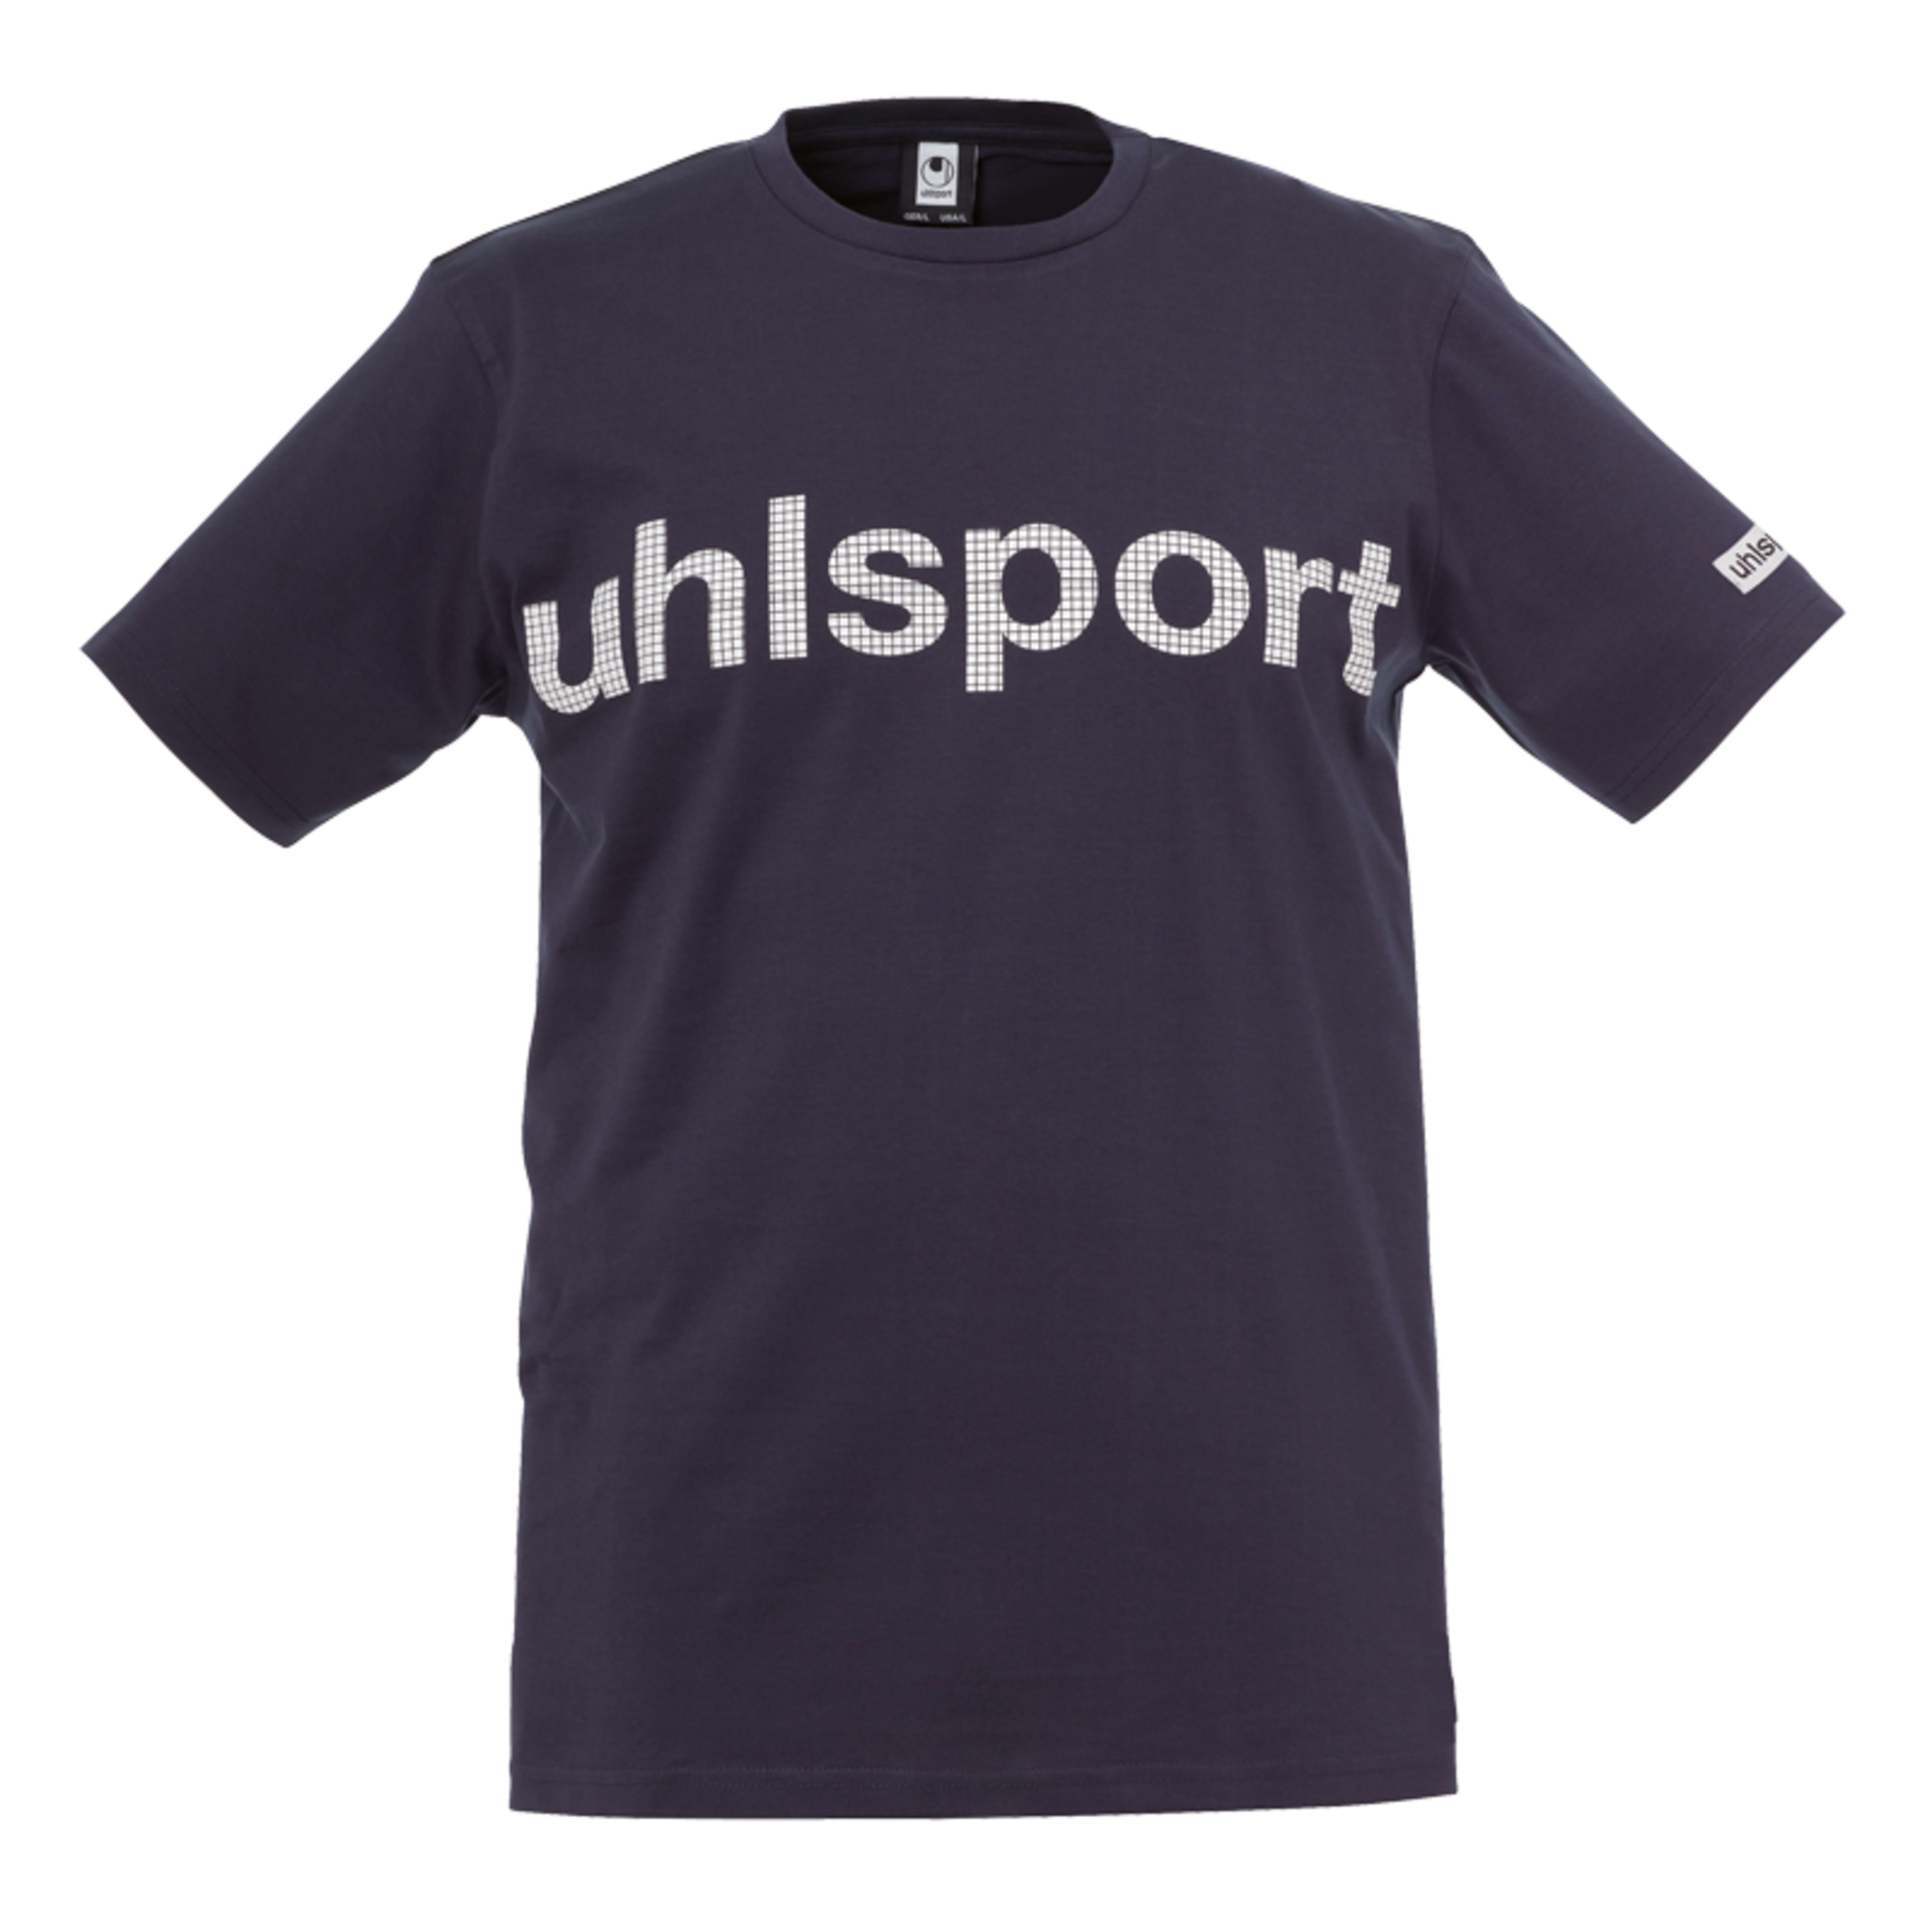 Essential Promo T-shirt Azul Marino Uhlsport